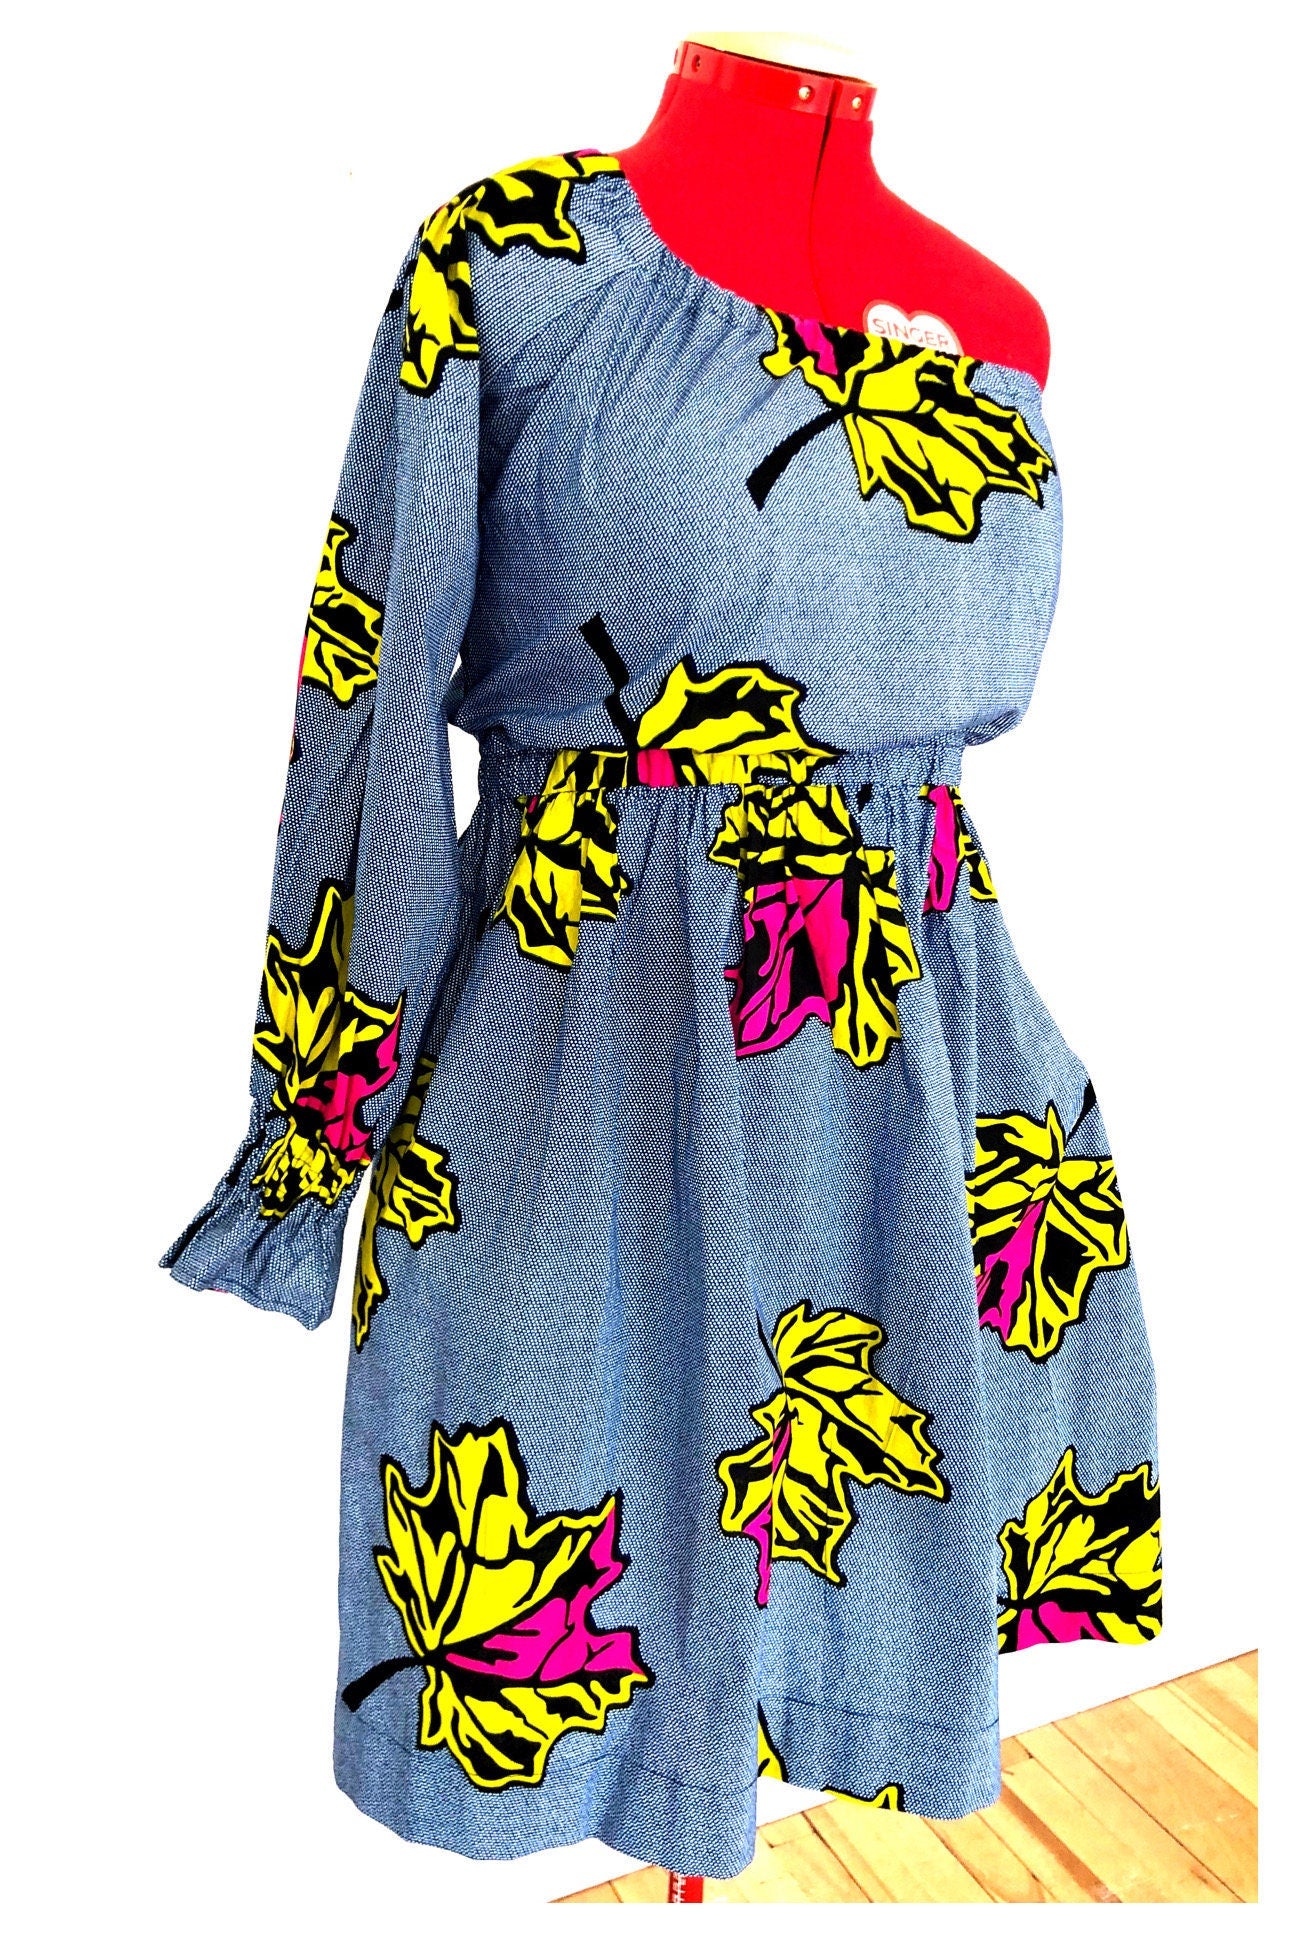 ODOUSSOU Wax print one shoulder dress with 2 pockets - Pink